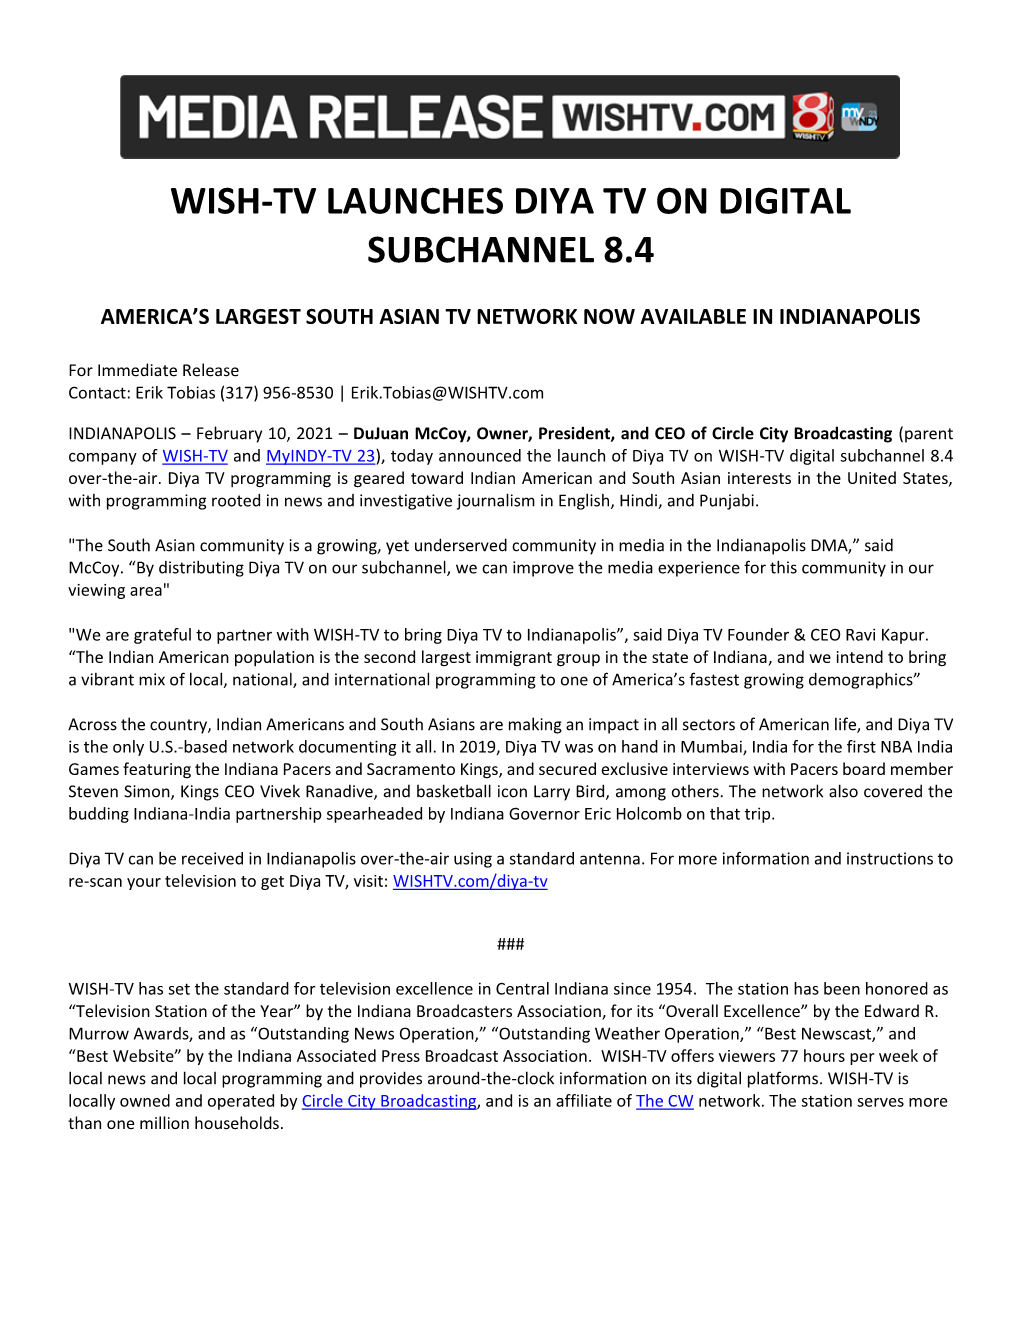 Wish-Tv Launches Diya Tv on Digital Subchannel 8.4